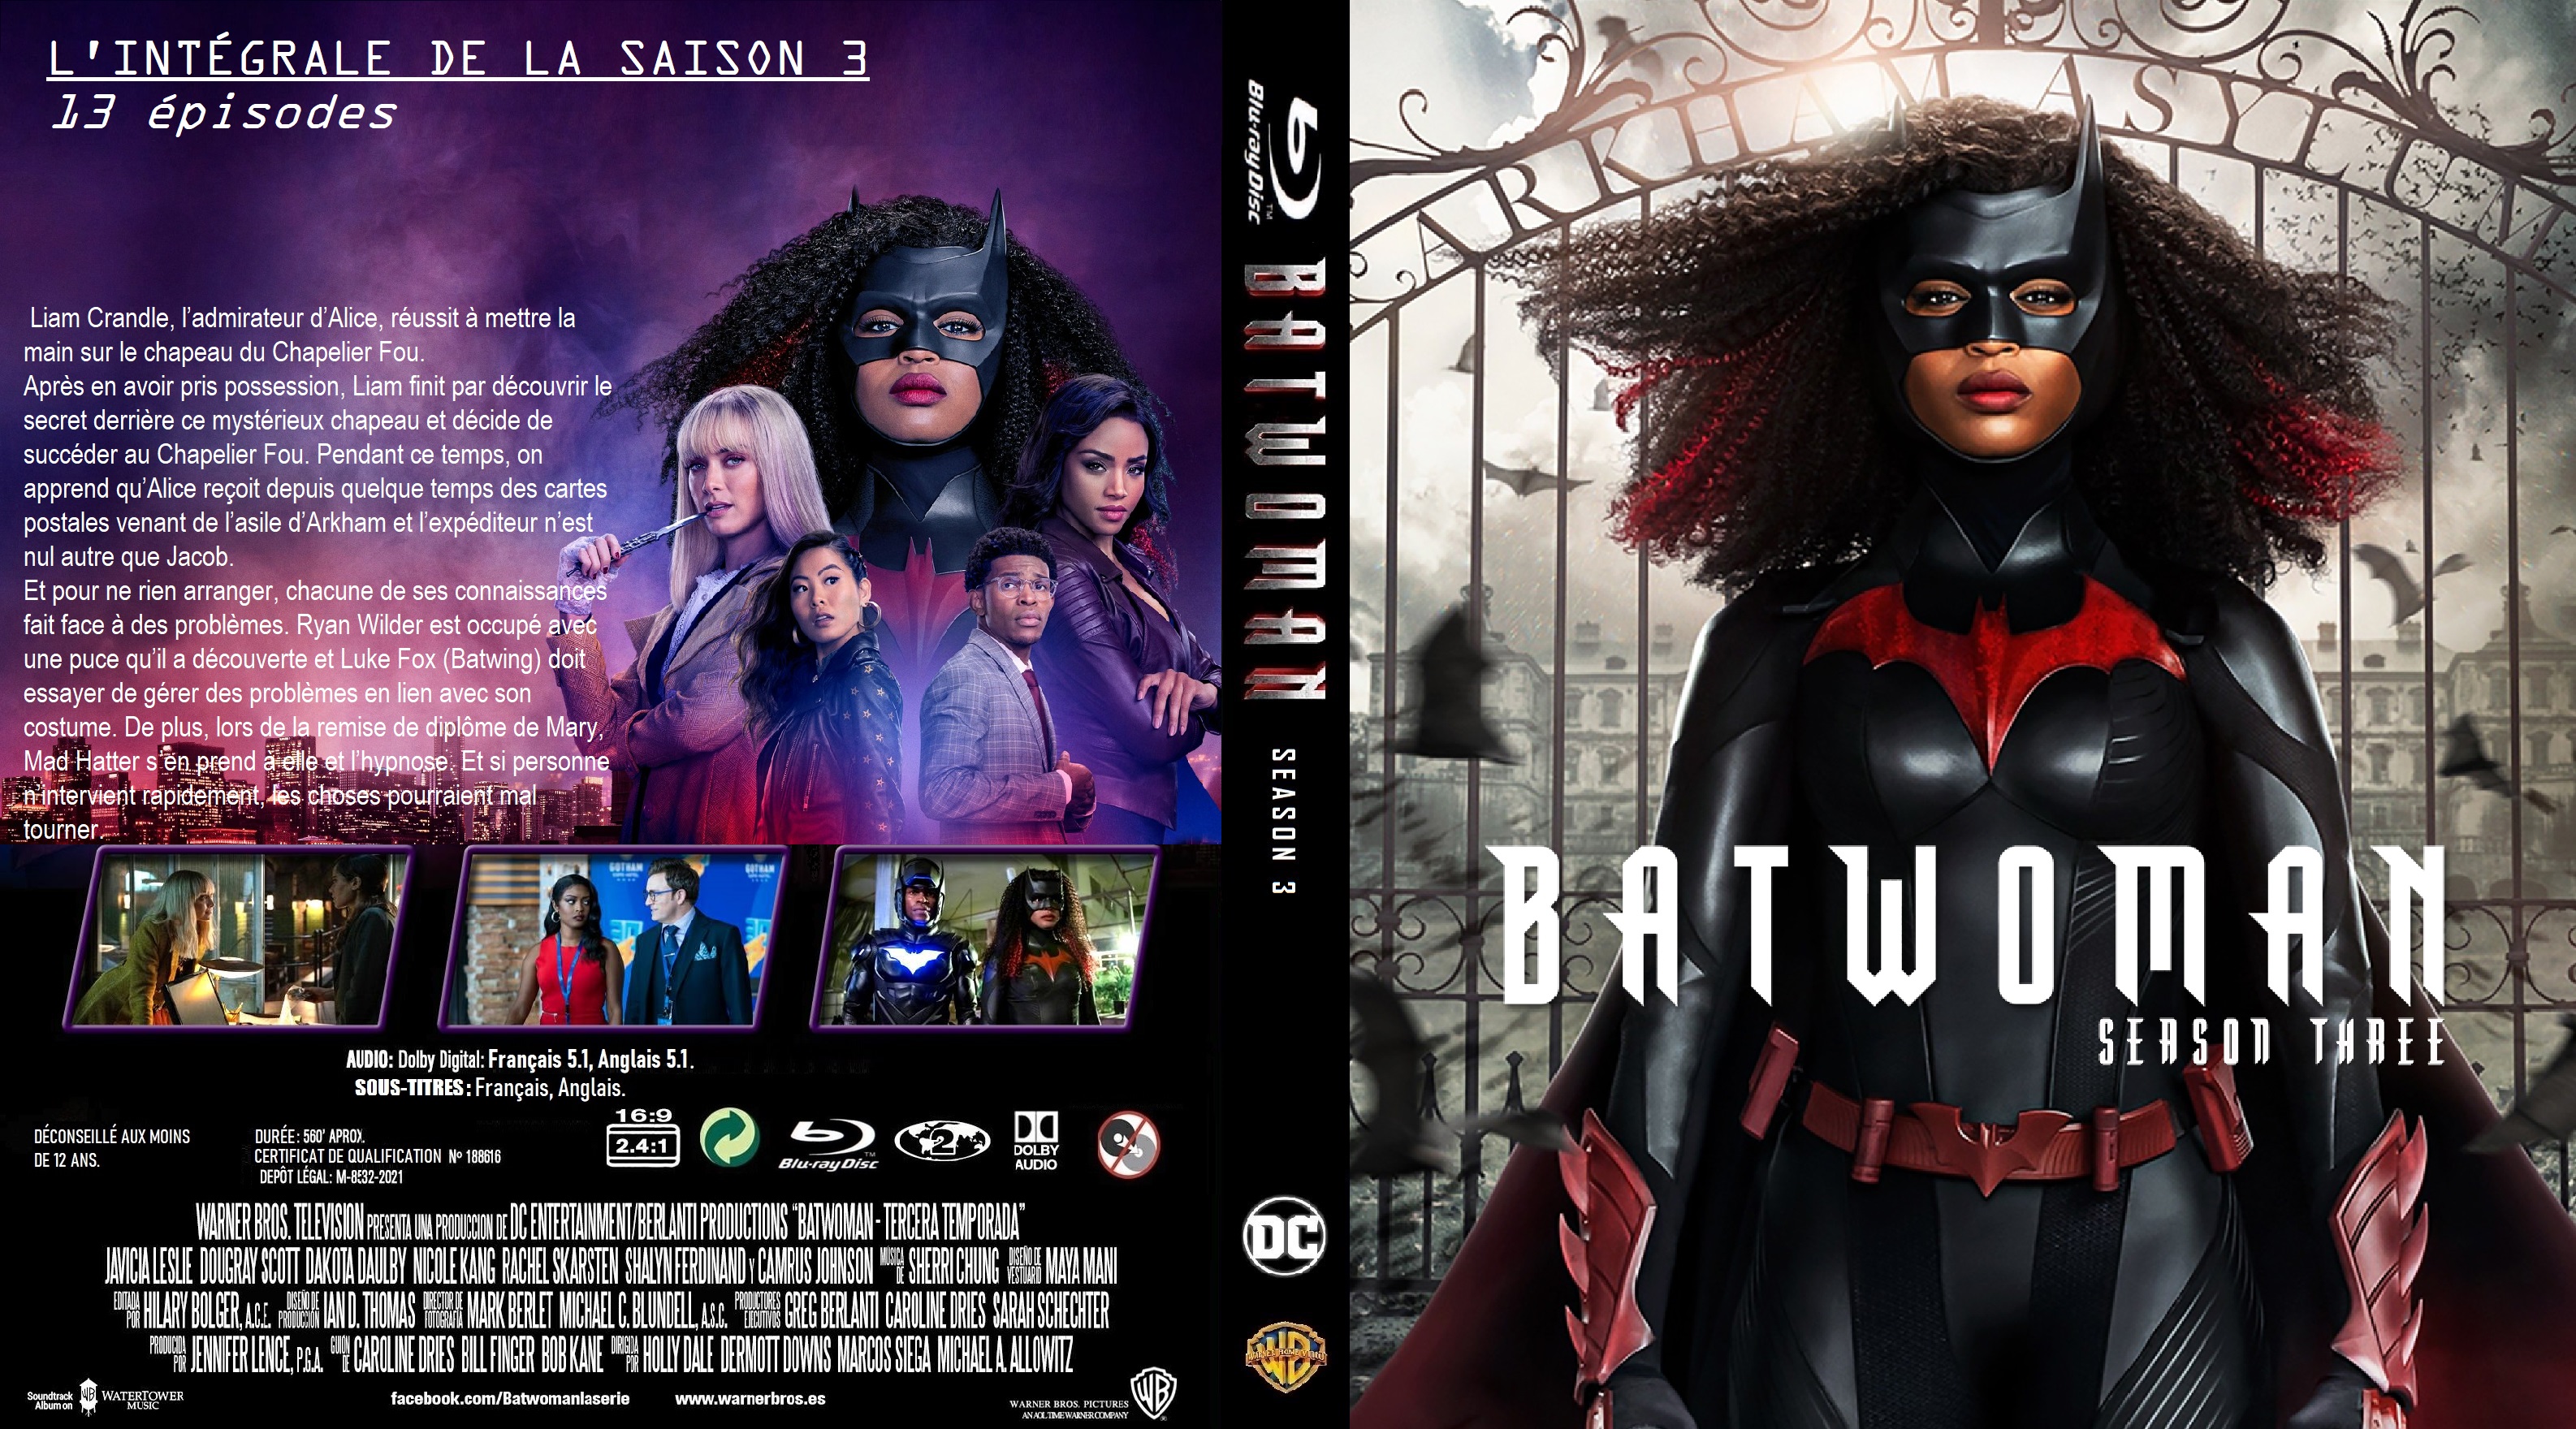 Jaquette DVD Batwoman Saison 3 Blu-ray custom